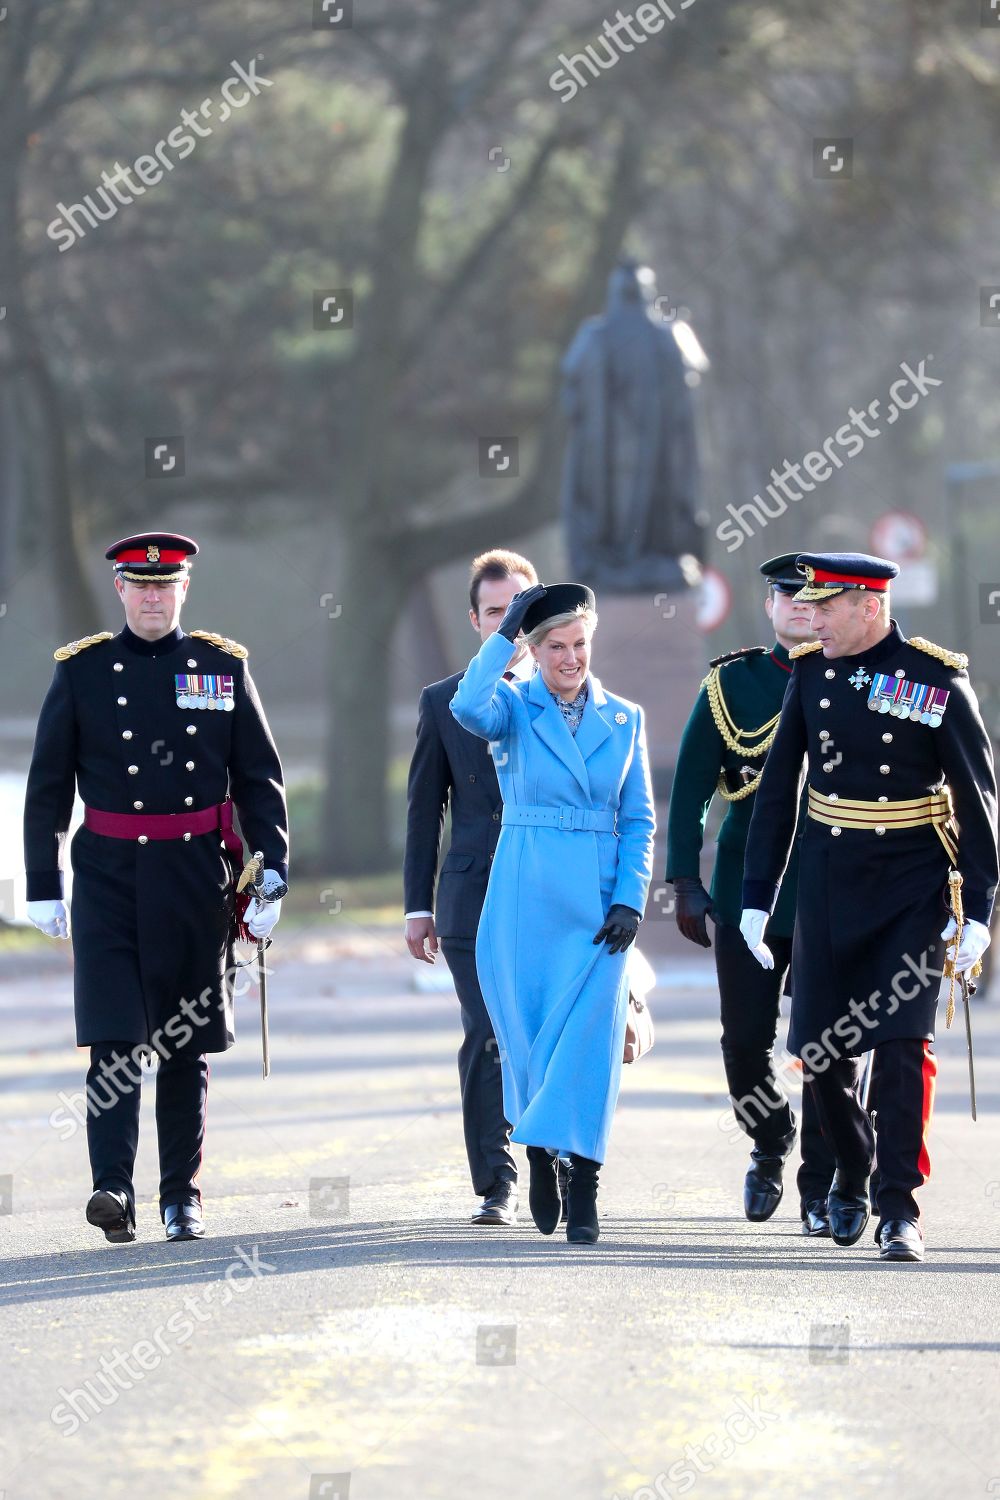 sovereigns-parade-at-royal-military-academy-sandhurst-uk-shutterstock-editorial-10504762cj.jpg